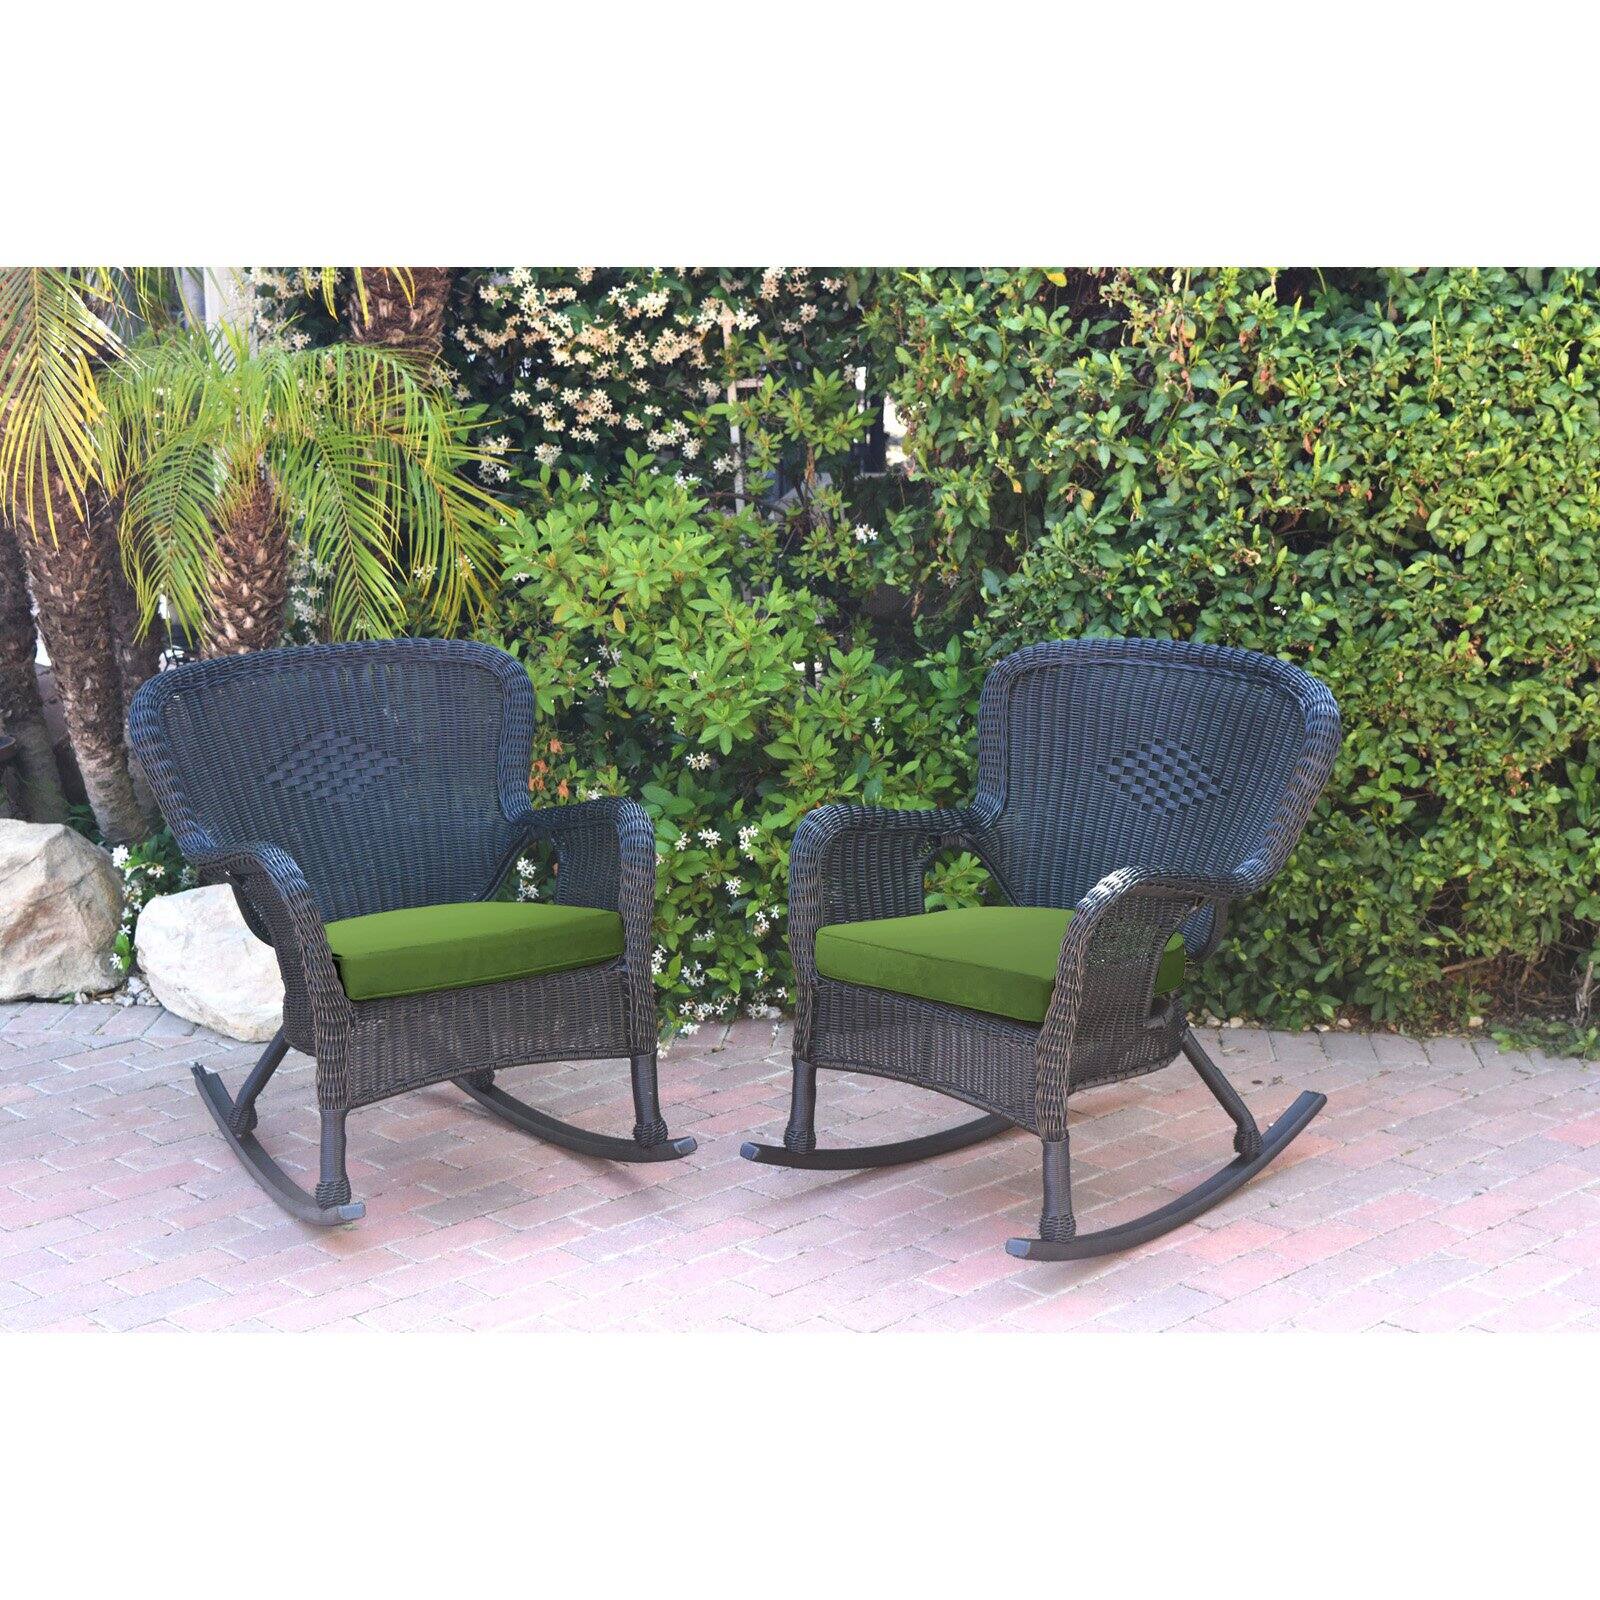 Jeco Windsor Resin Wicker Outdoor Rocking Chair - Set of 2 - image 1 of 2